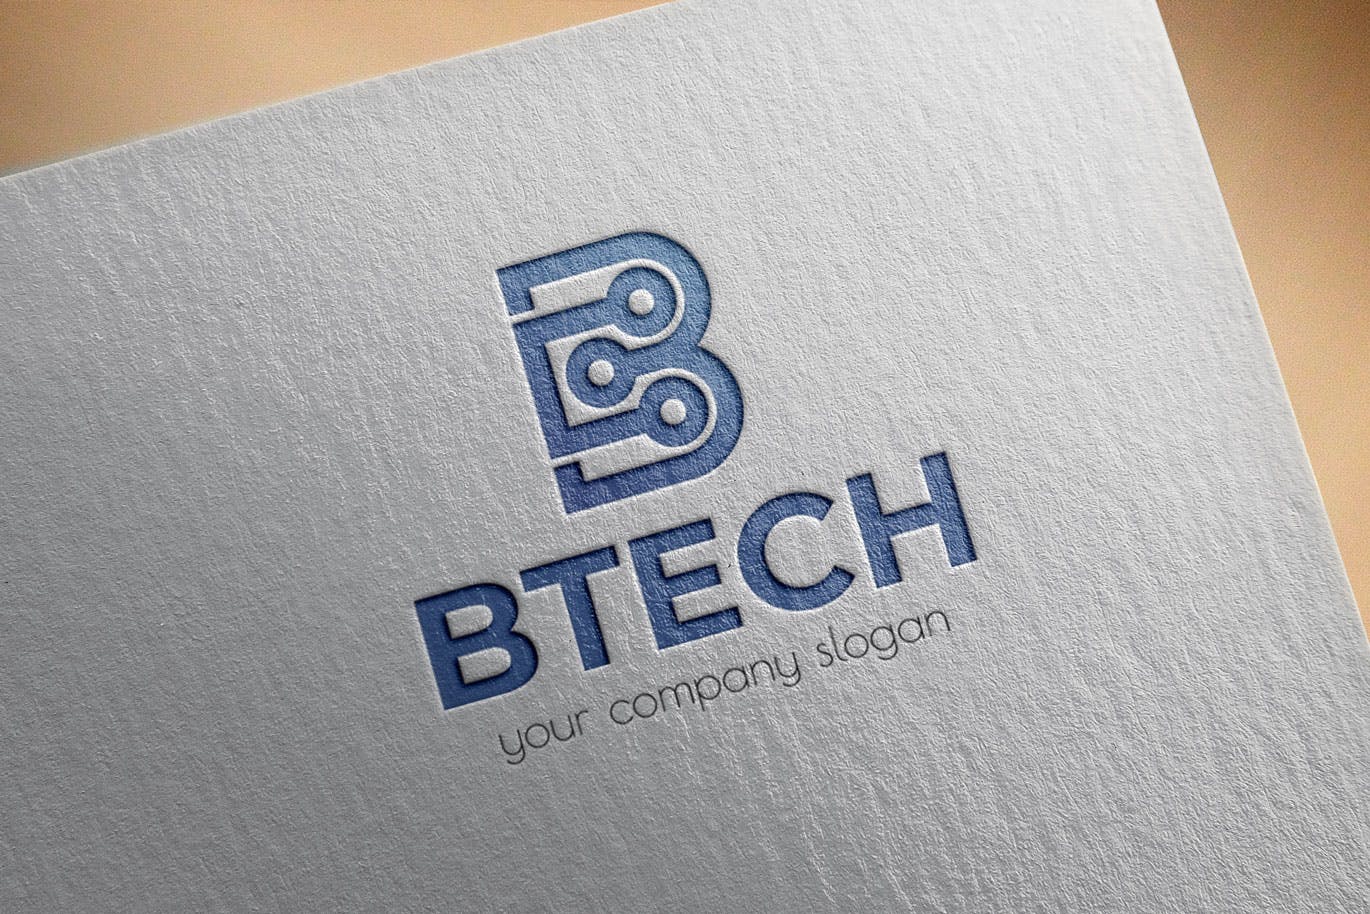 基于B字母图形的企业Logo设计普贤居精选模板 Letter Based Business Logo Template插图(2)